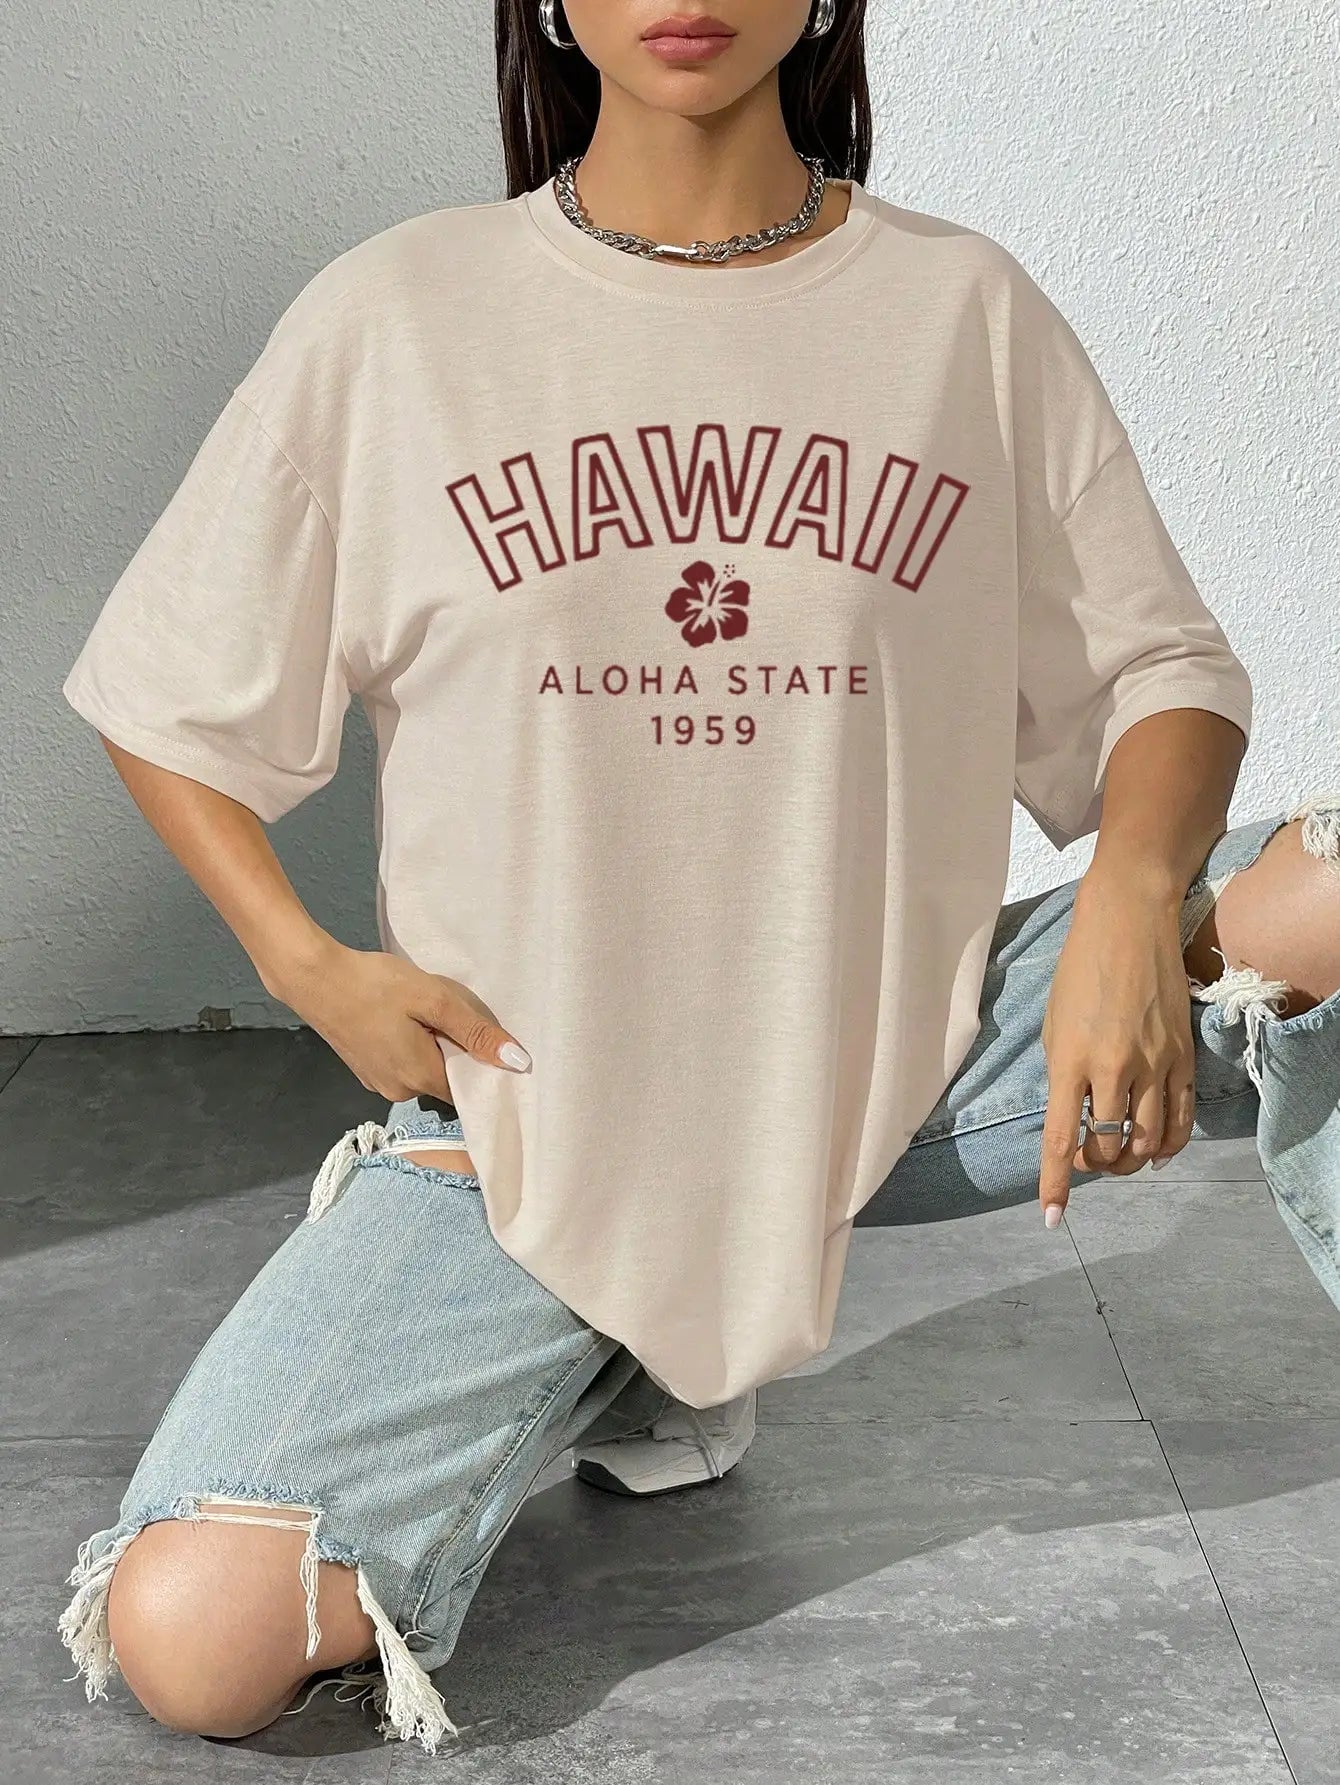 Hawaii Aloha State 1959 Printed Cotton T-Shirt For Women